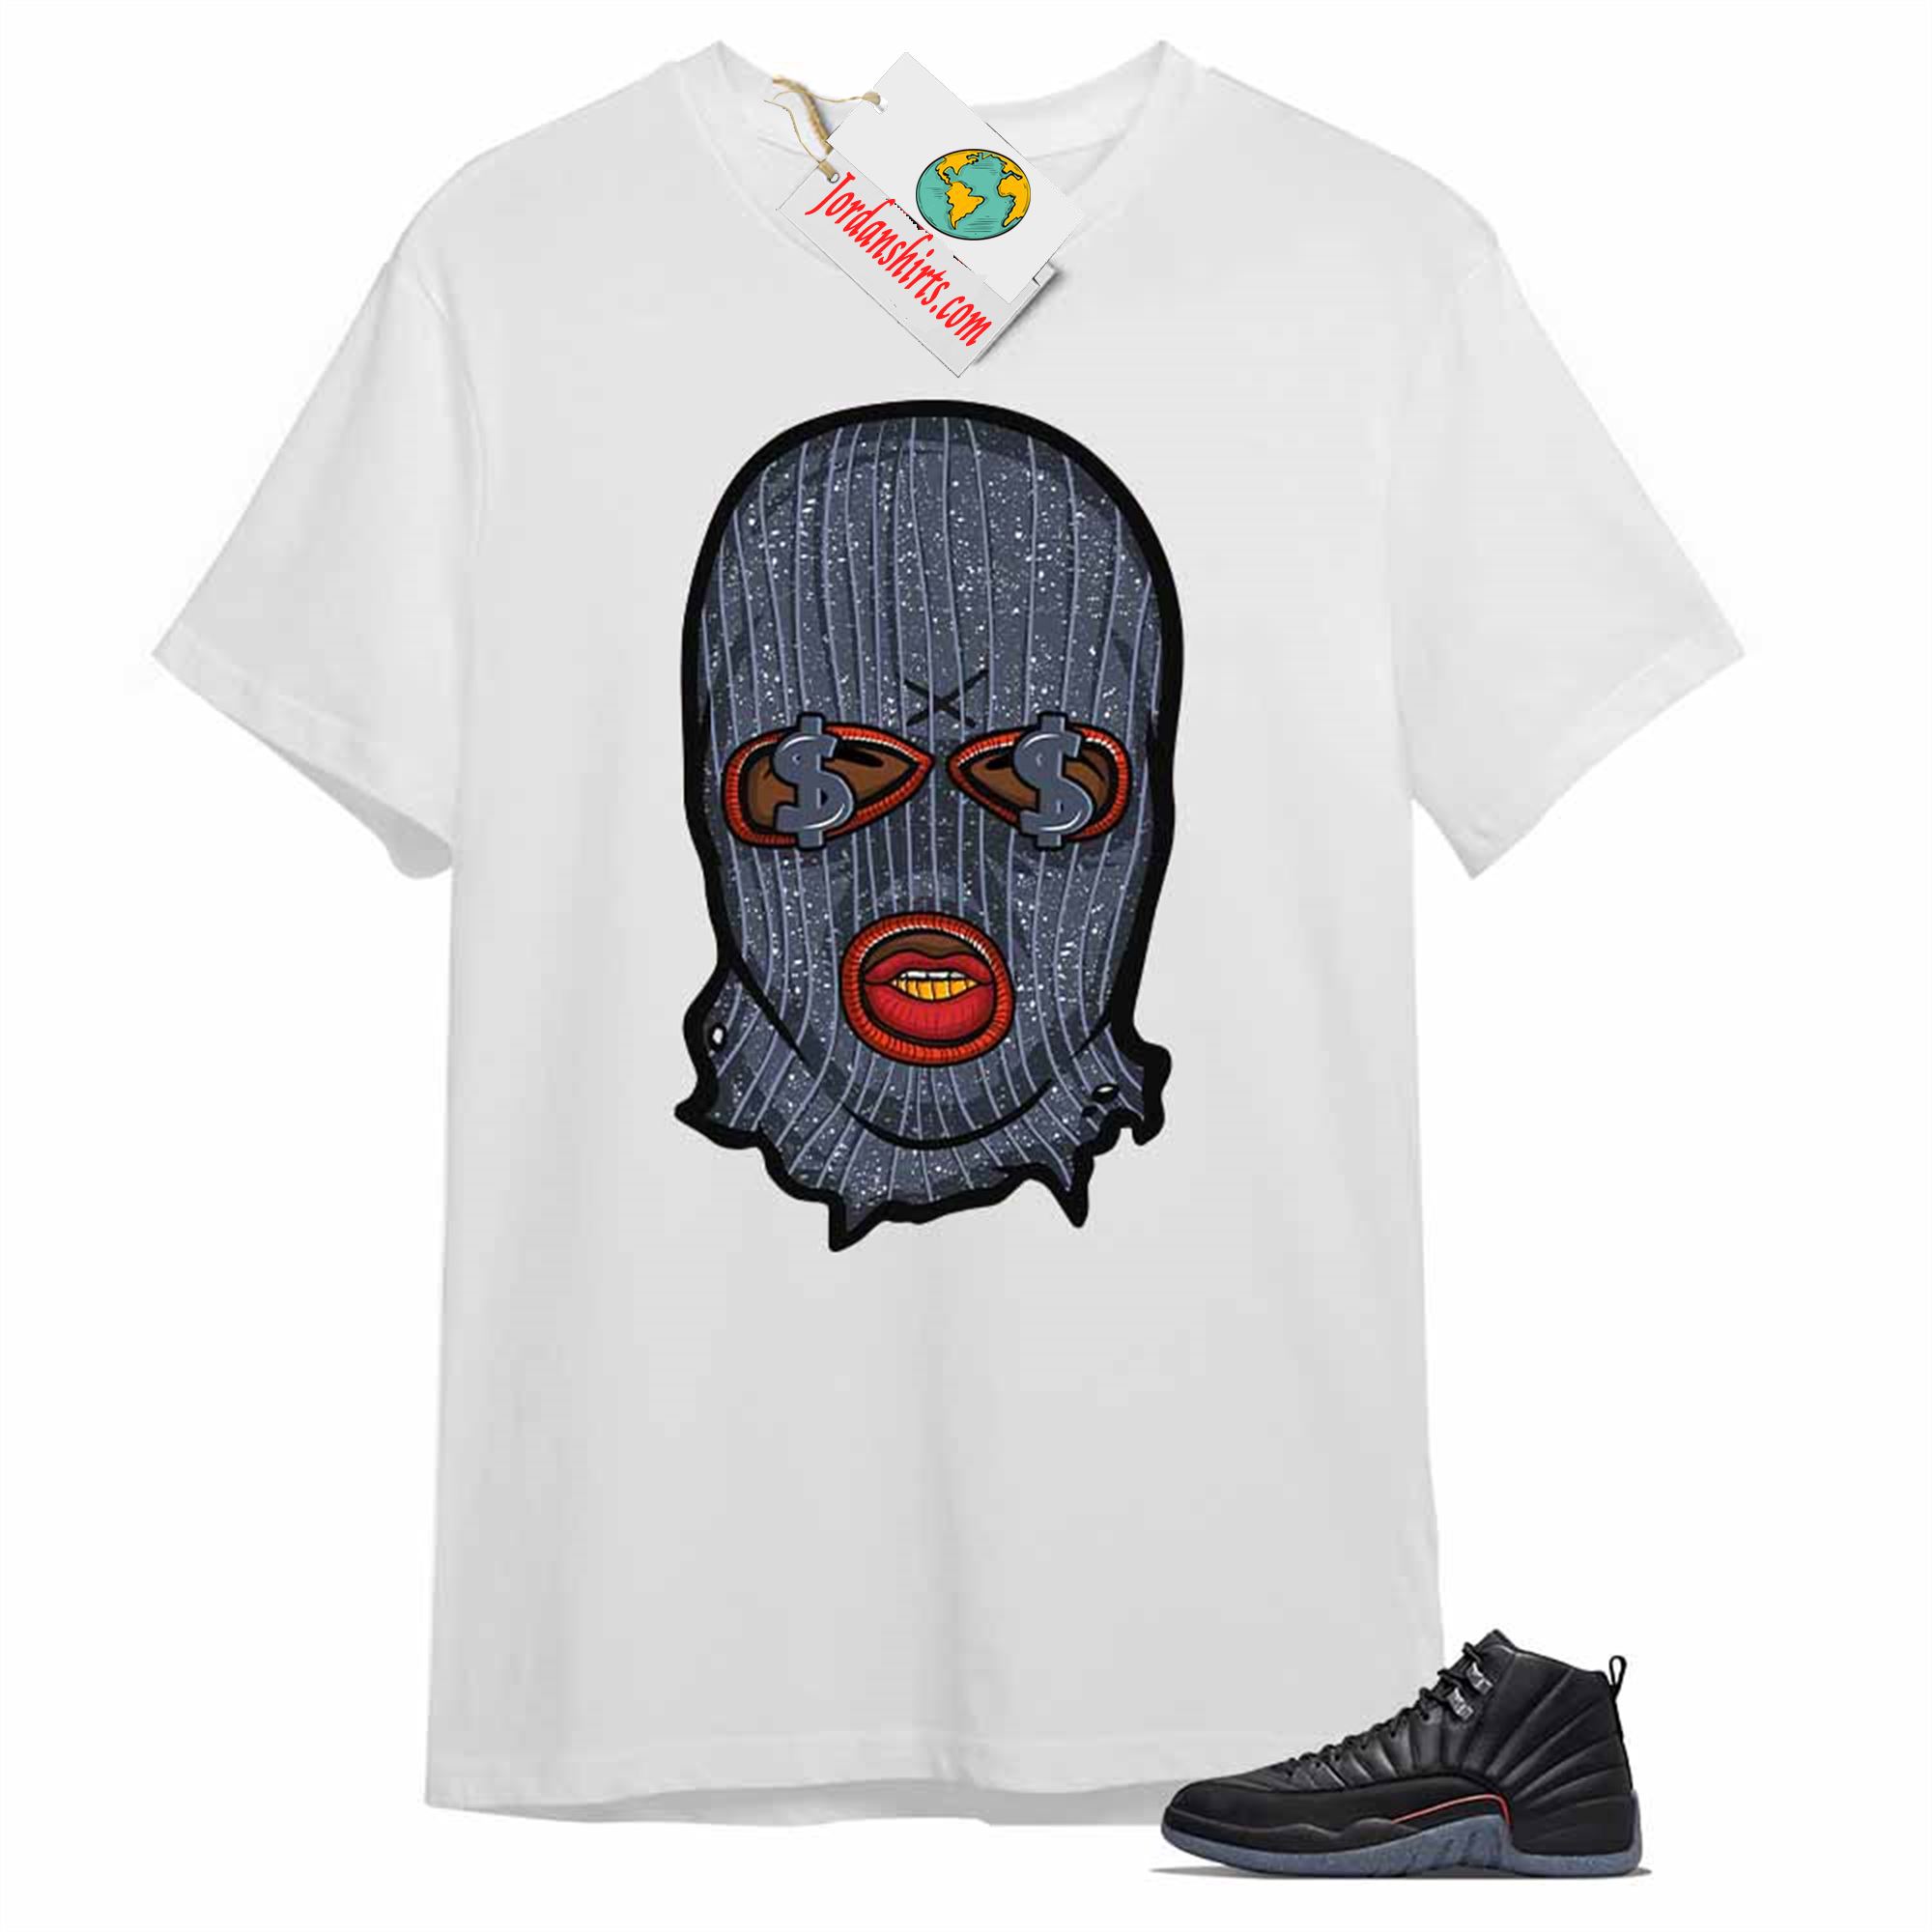 Jordan 12 Shirt, Gangster Ski Mask Money White Air Jordan 12 Utility Grind 12s Full Size Up To 5xl